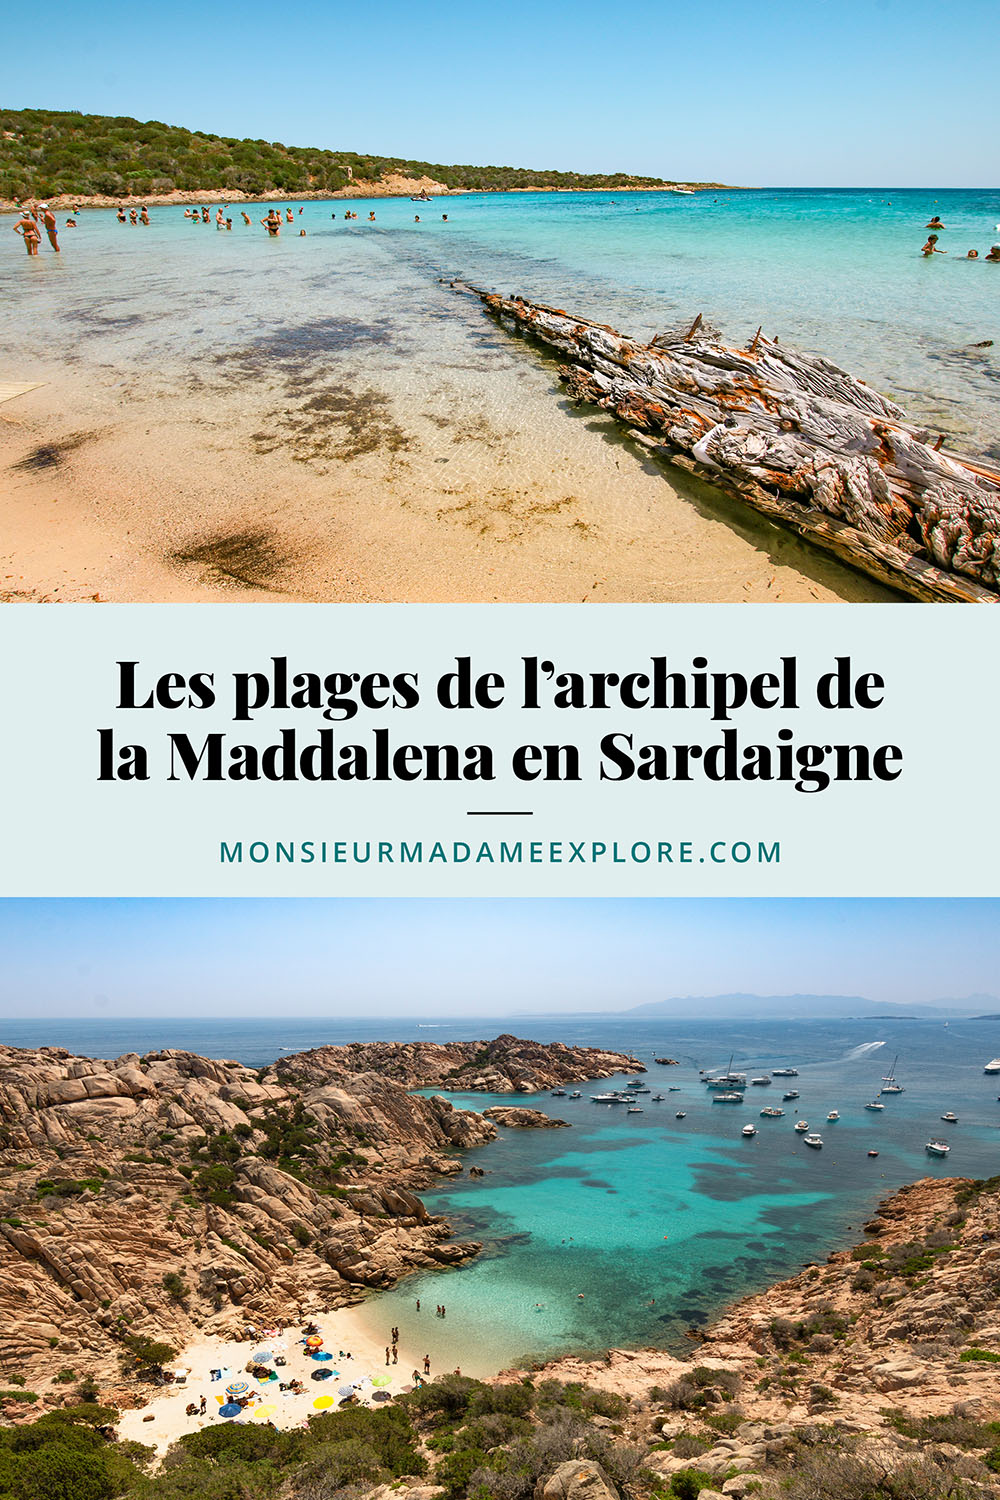 Les plages de l’archipel de la Maddalena en Sardaigne, Monsieur+Madame Explore, Blogue de voyage, Italie / The beaches of the Maddalena archipelago in Sardinia, Italy